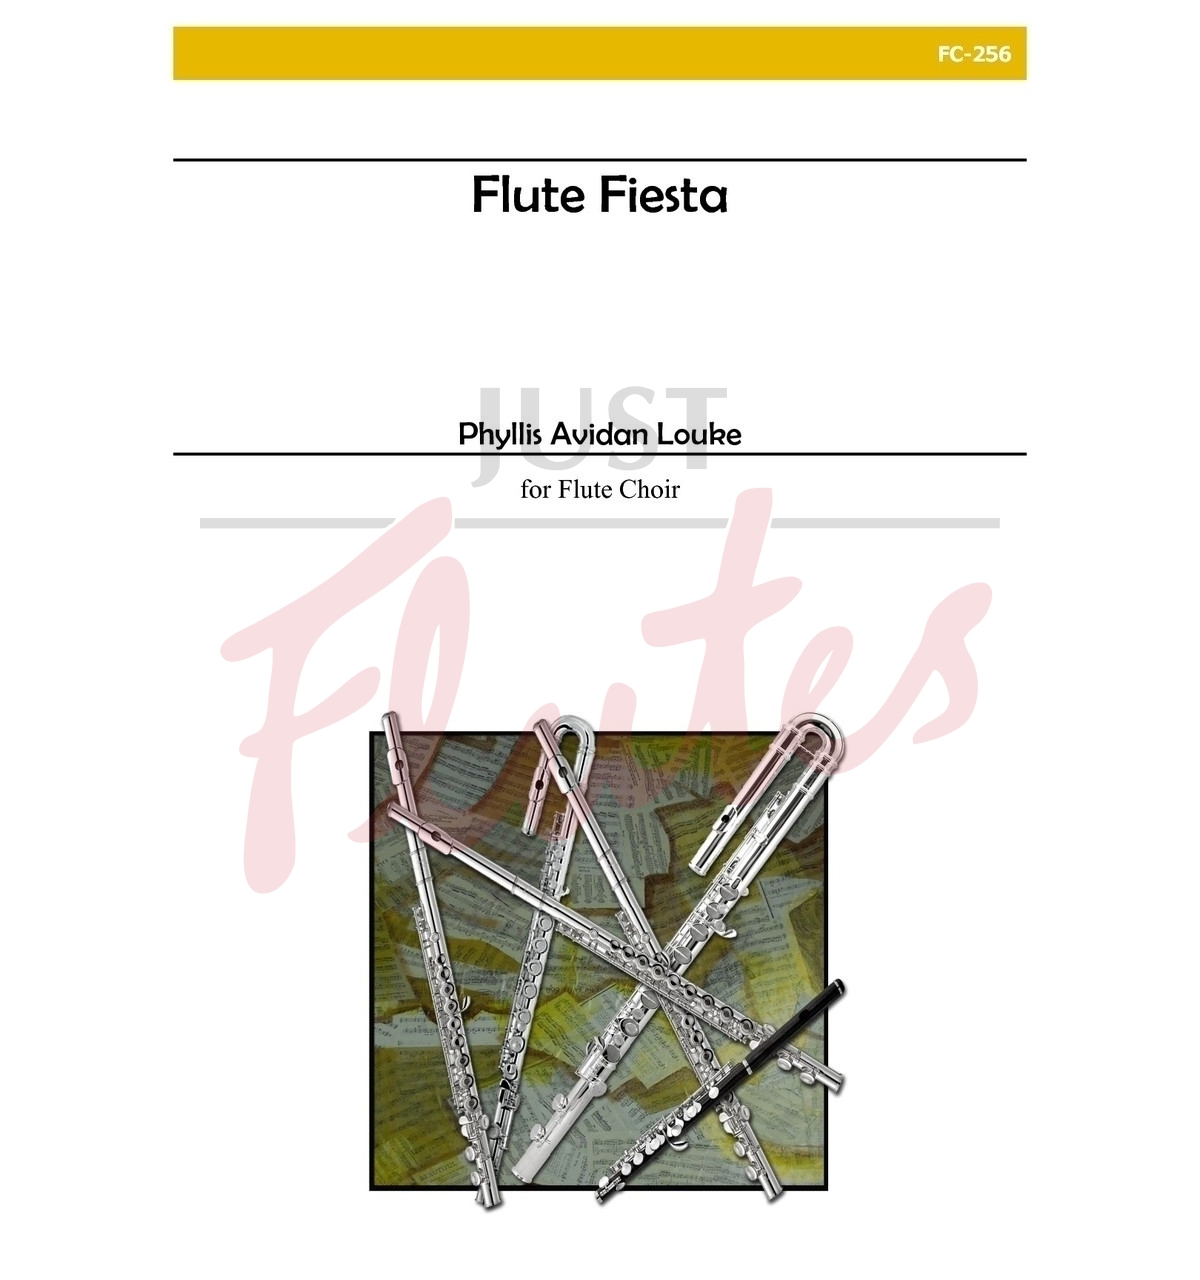 Flute Fiesta